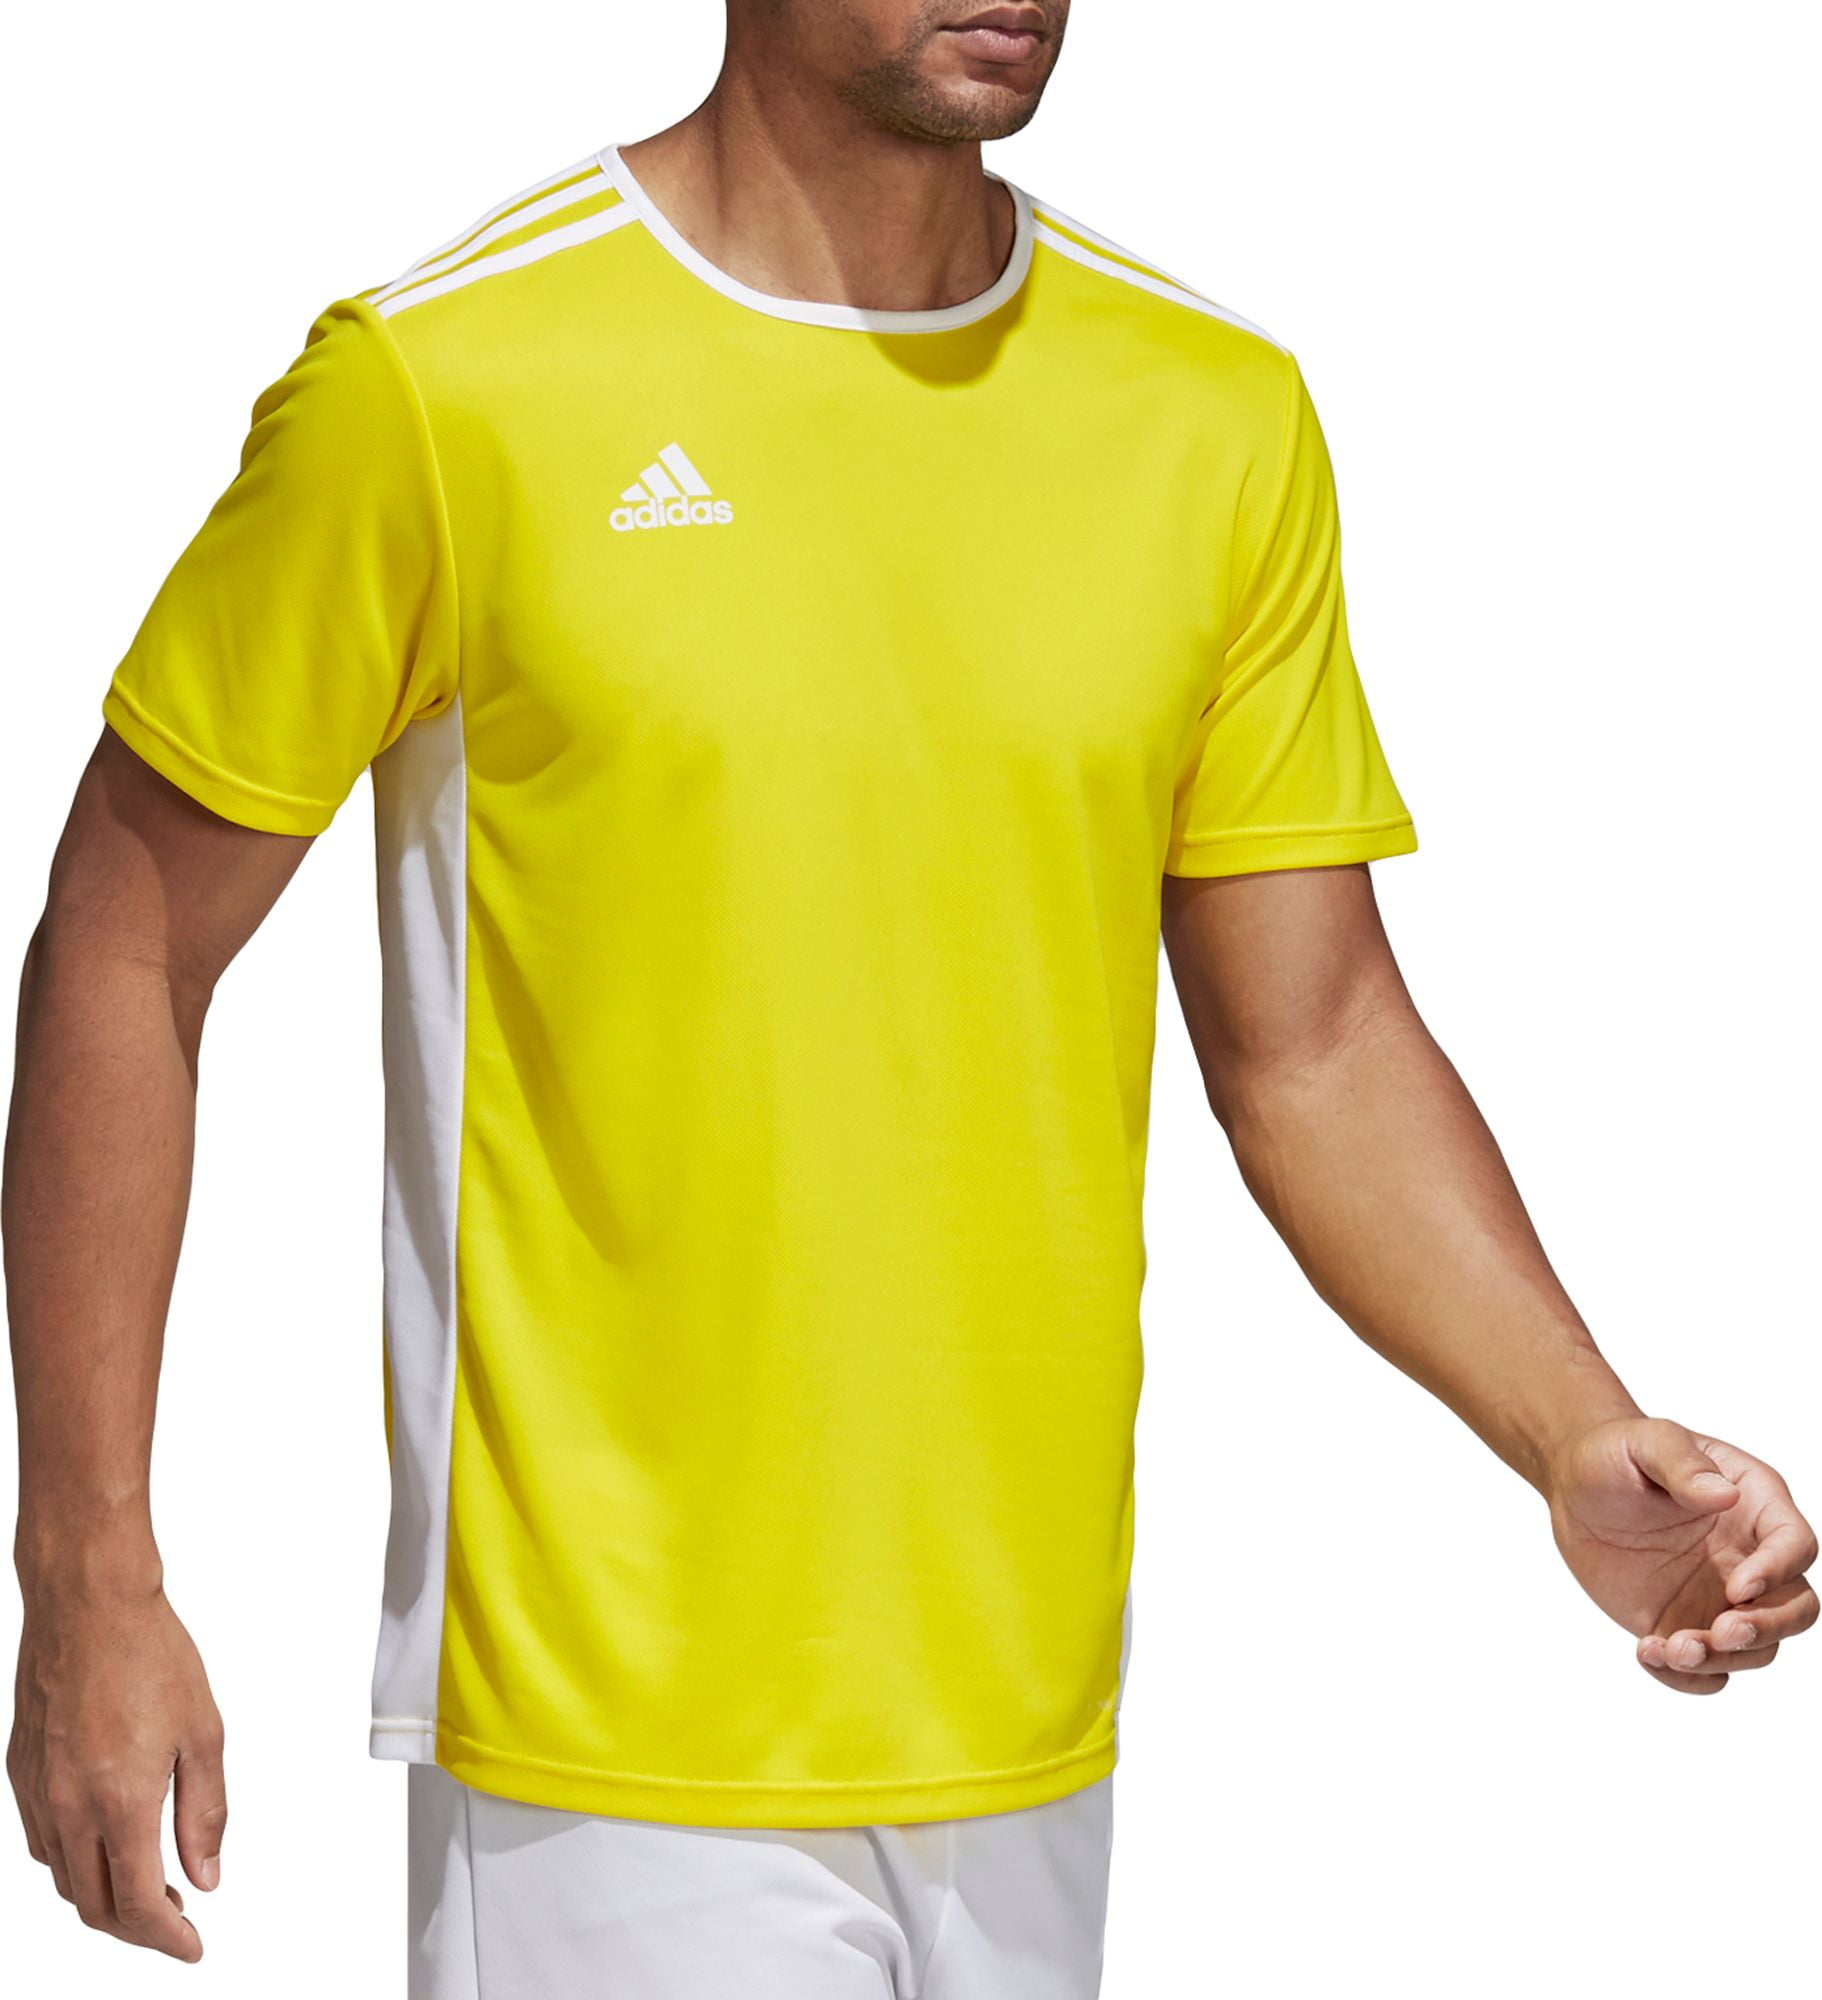 adidas Men's Entrada 18 Soccer Jersey - Walmart.com - Walmart.com